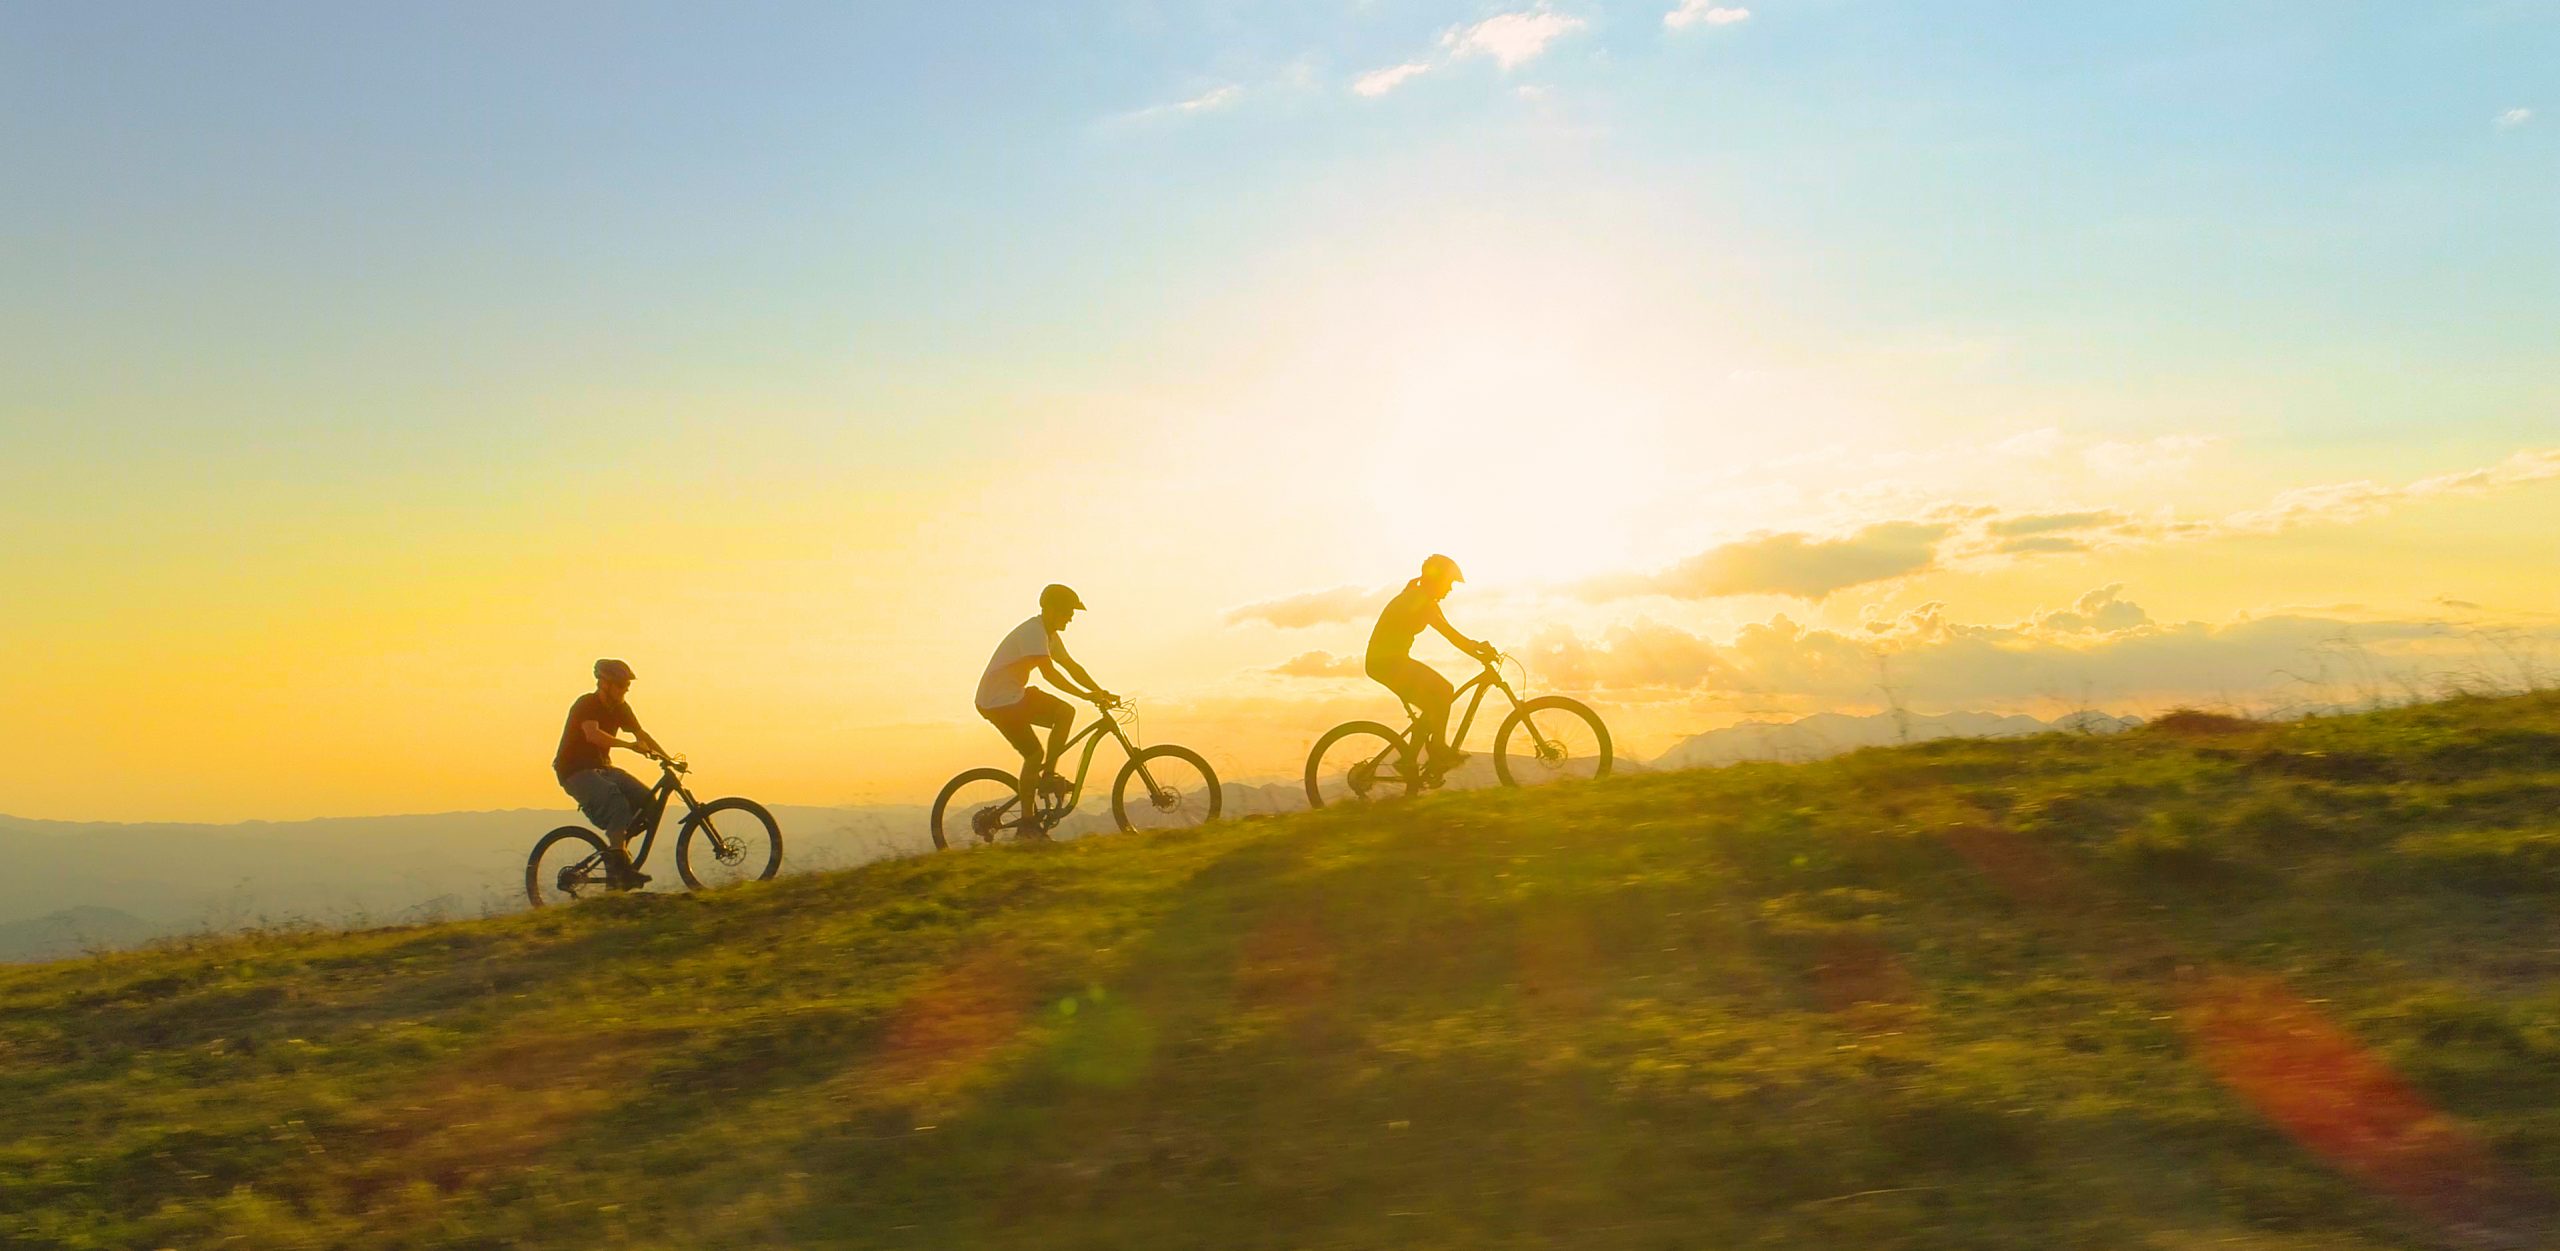 Bike rental: Discover a range of benefits